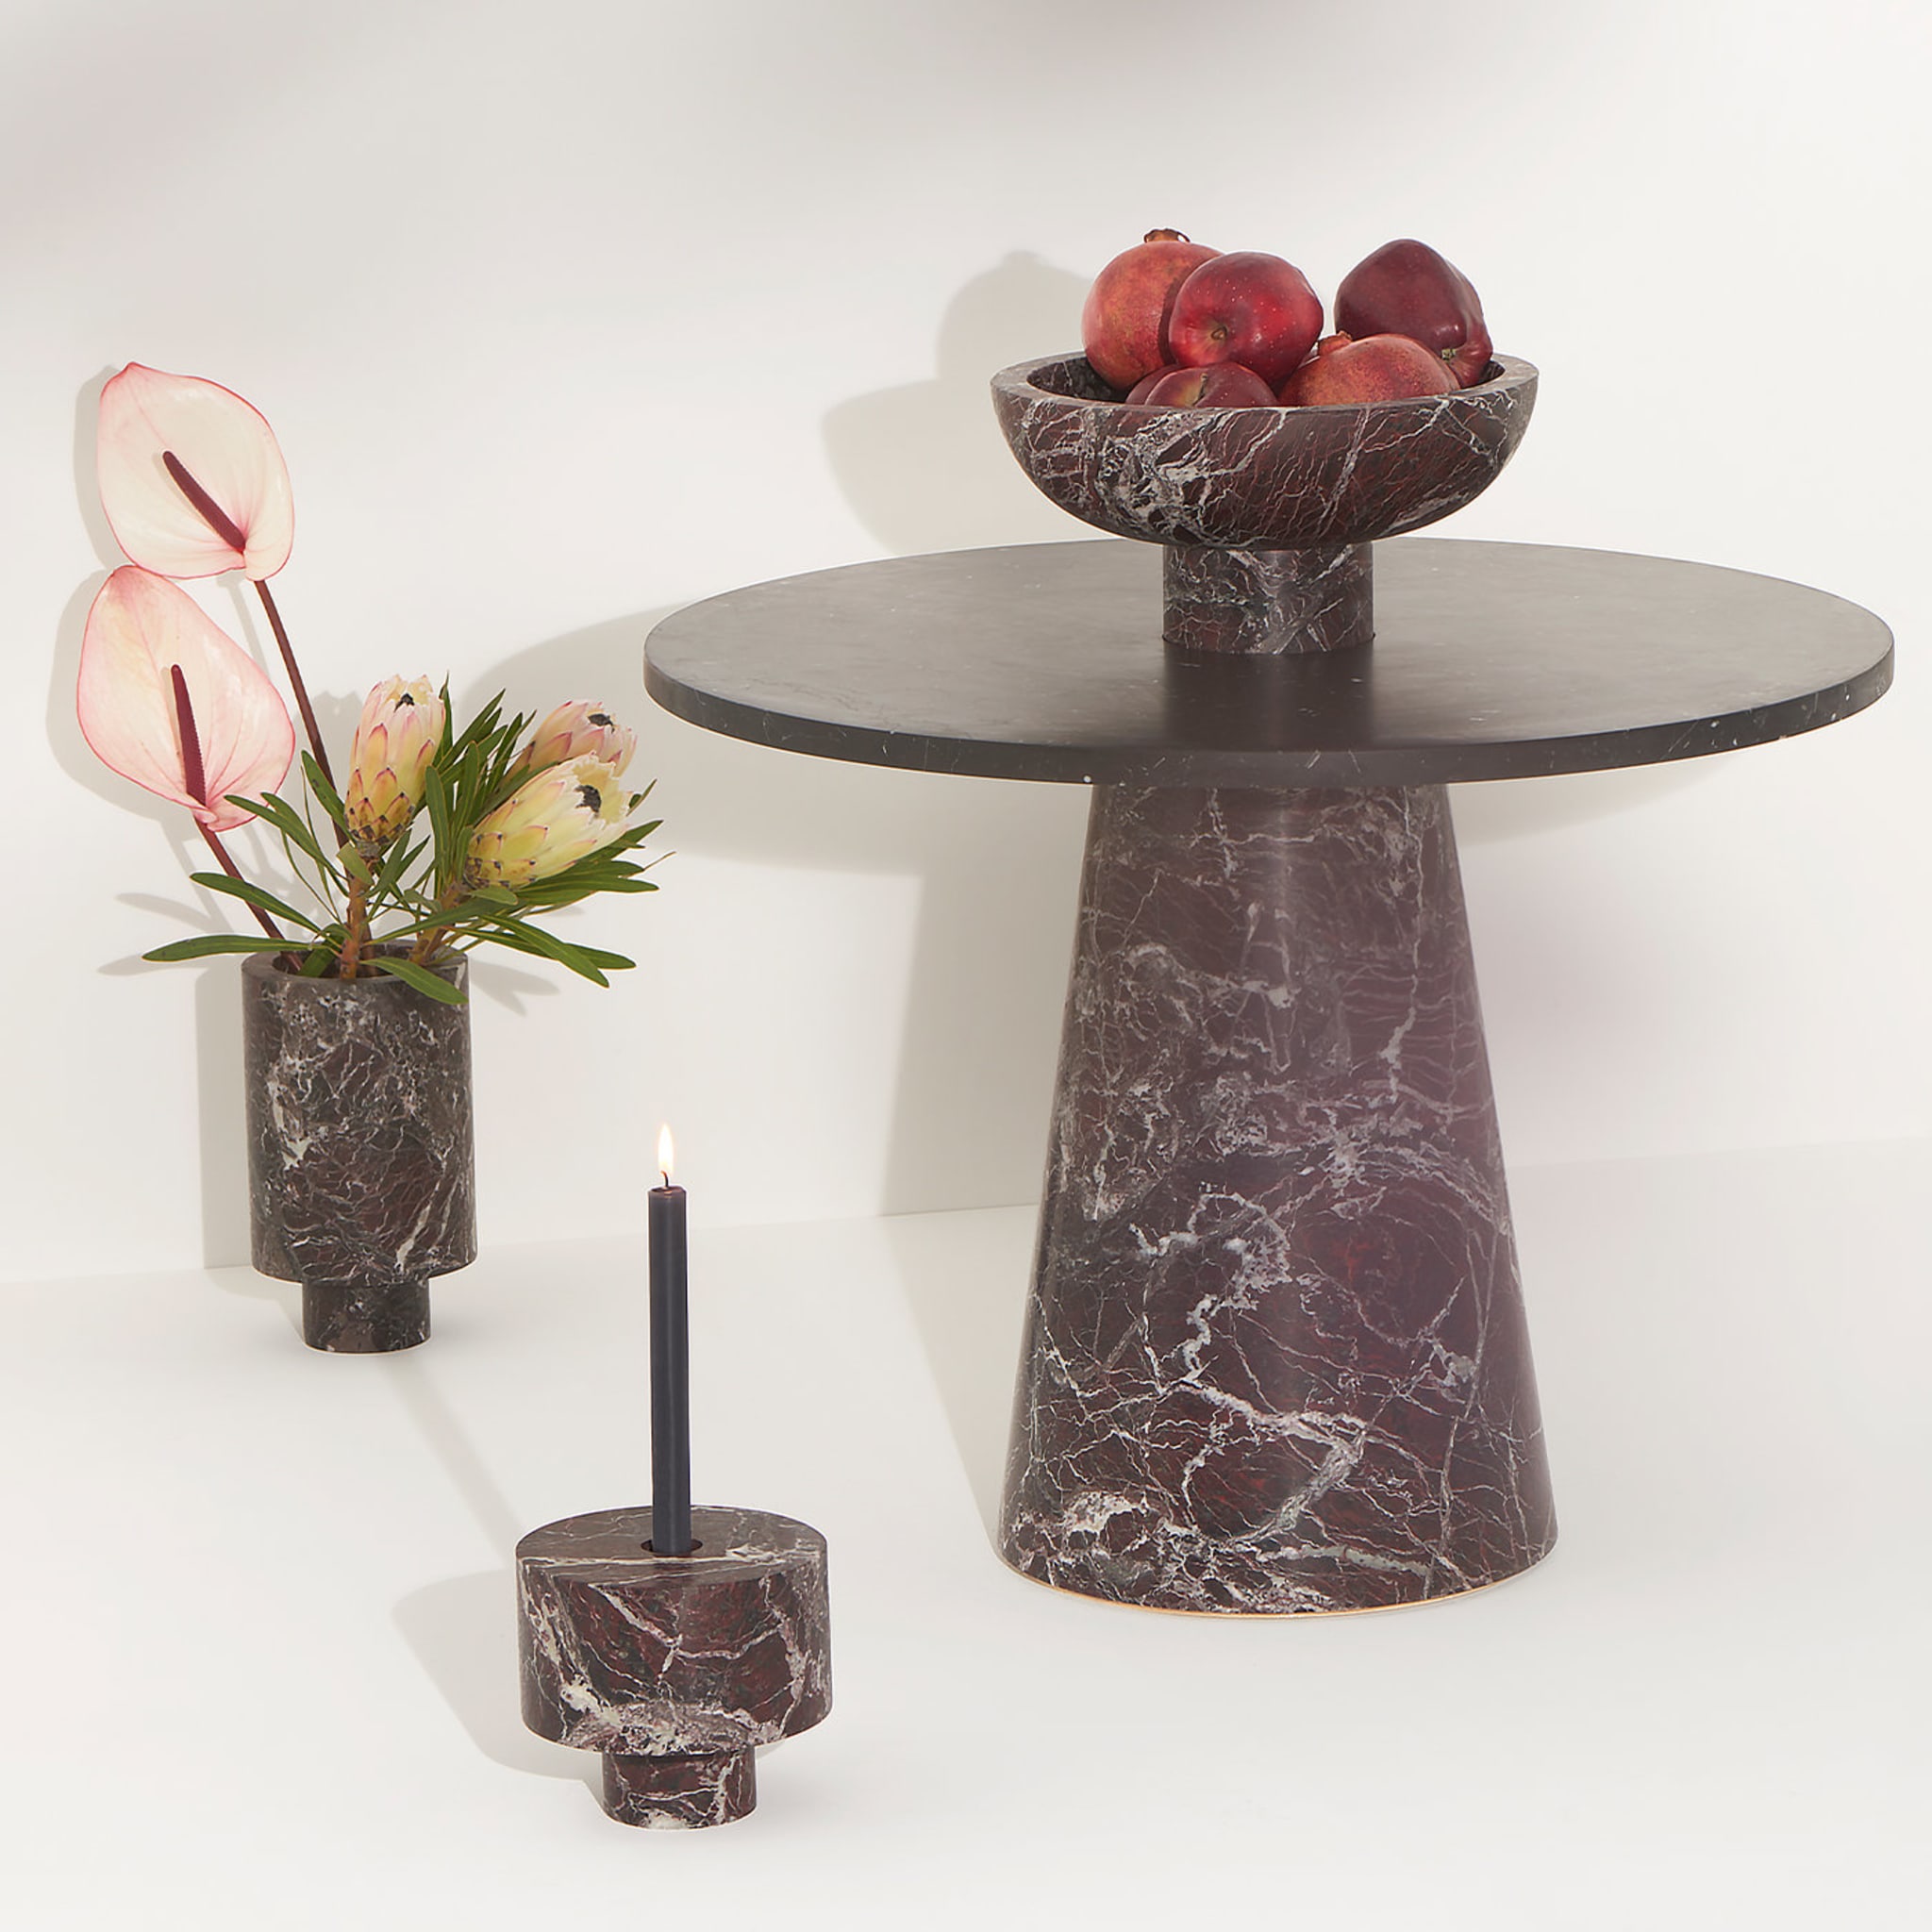 Inside Out Red/Black Marble Coffee Table by Karen Chekerdjian #1 - Alternative view 1